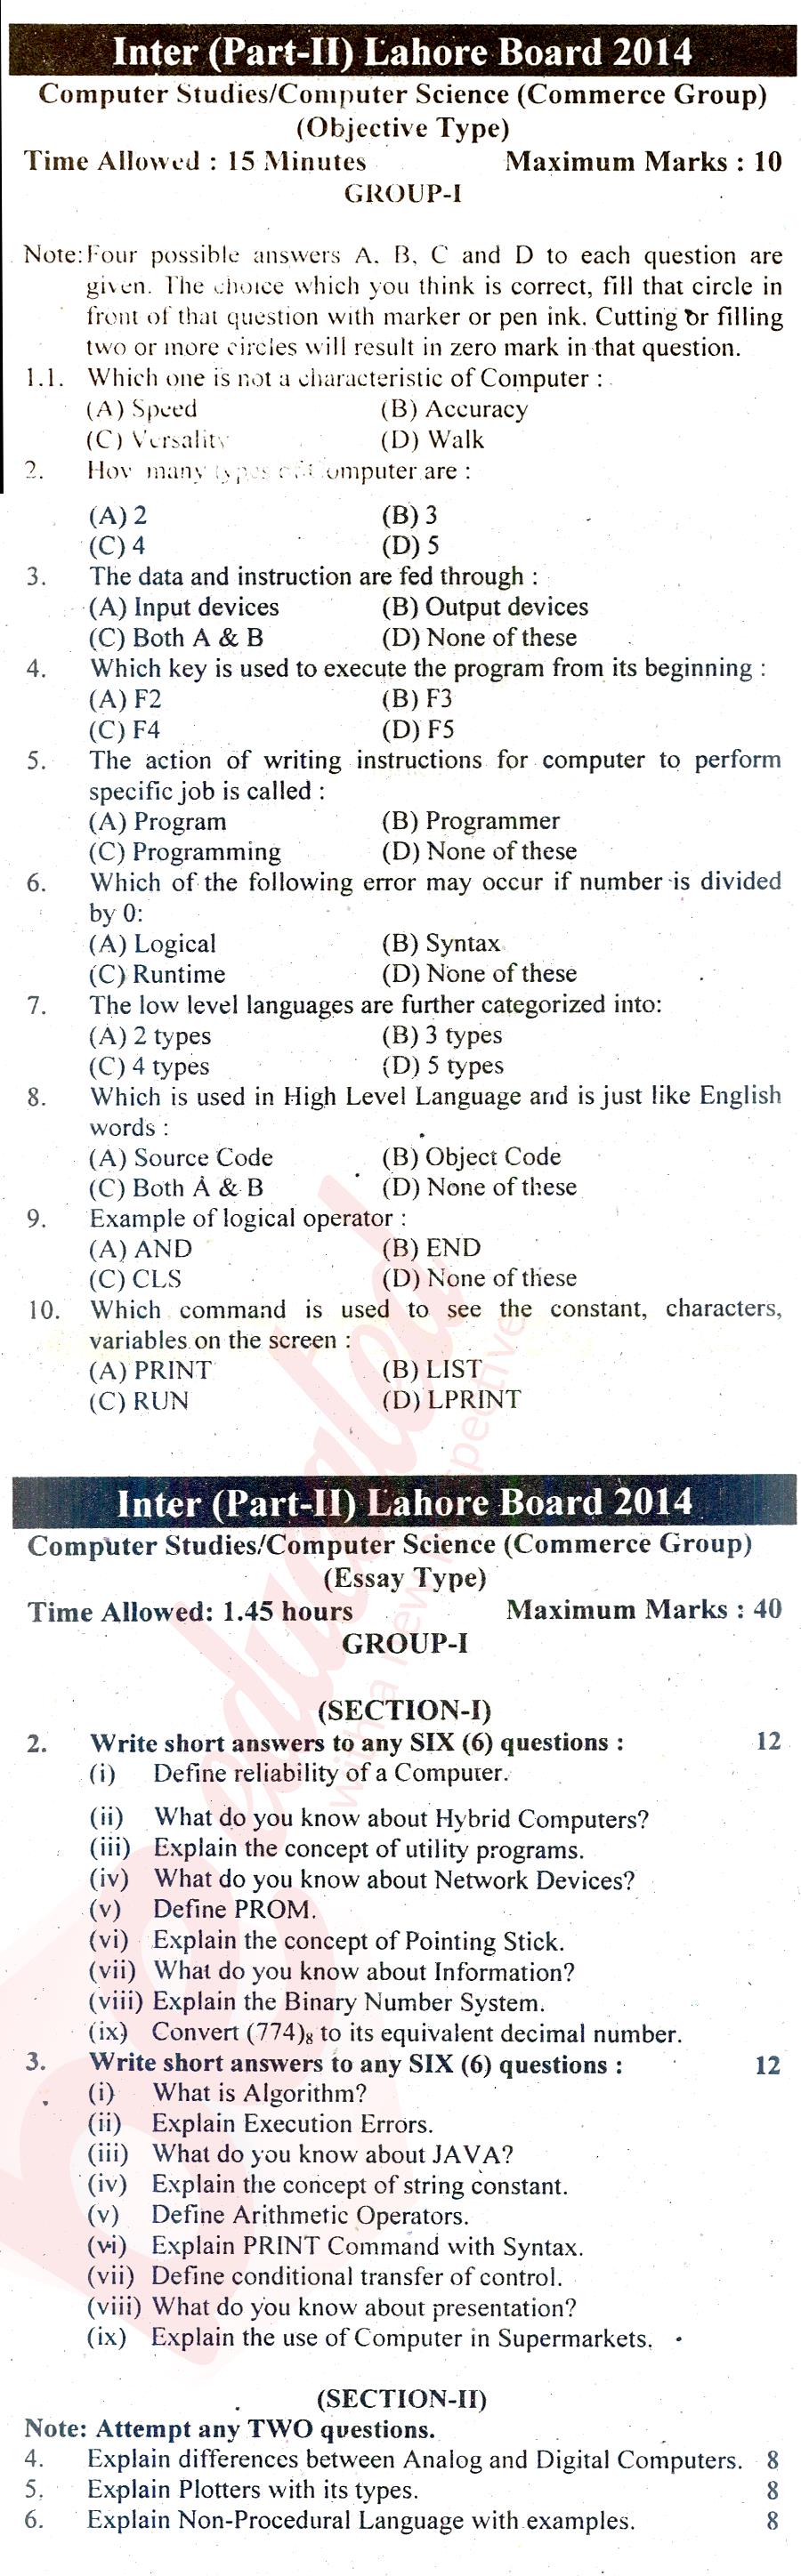 Computer Science ICOM Part 2 Past Paper Group 1 BISE Lahore 2014